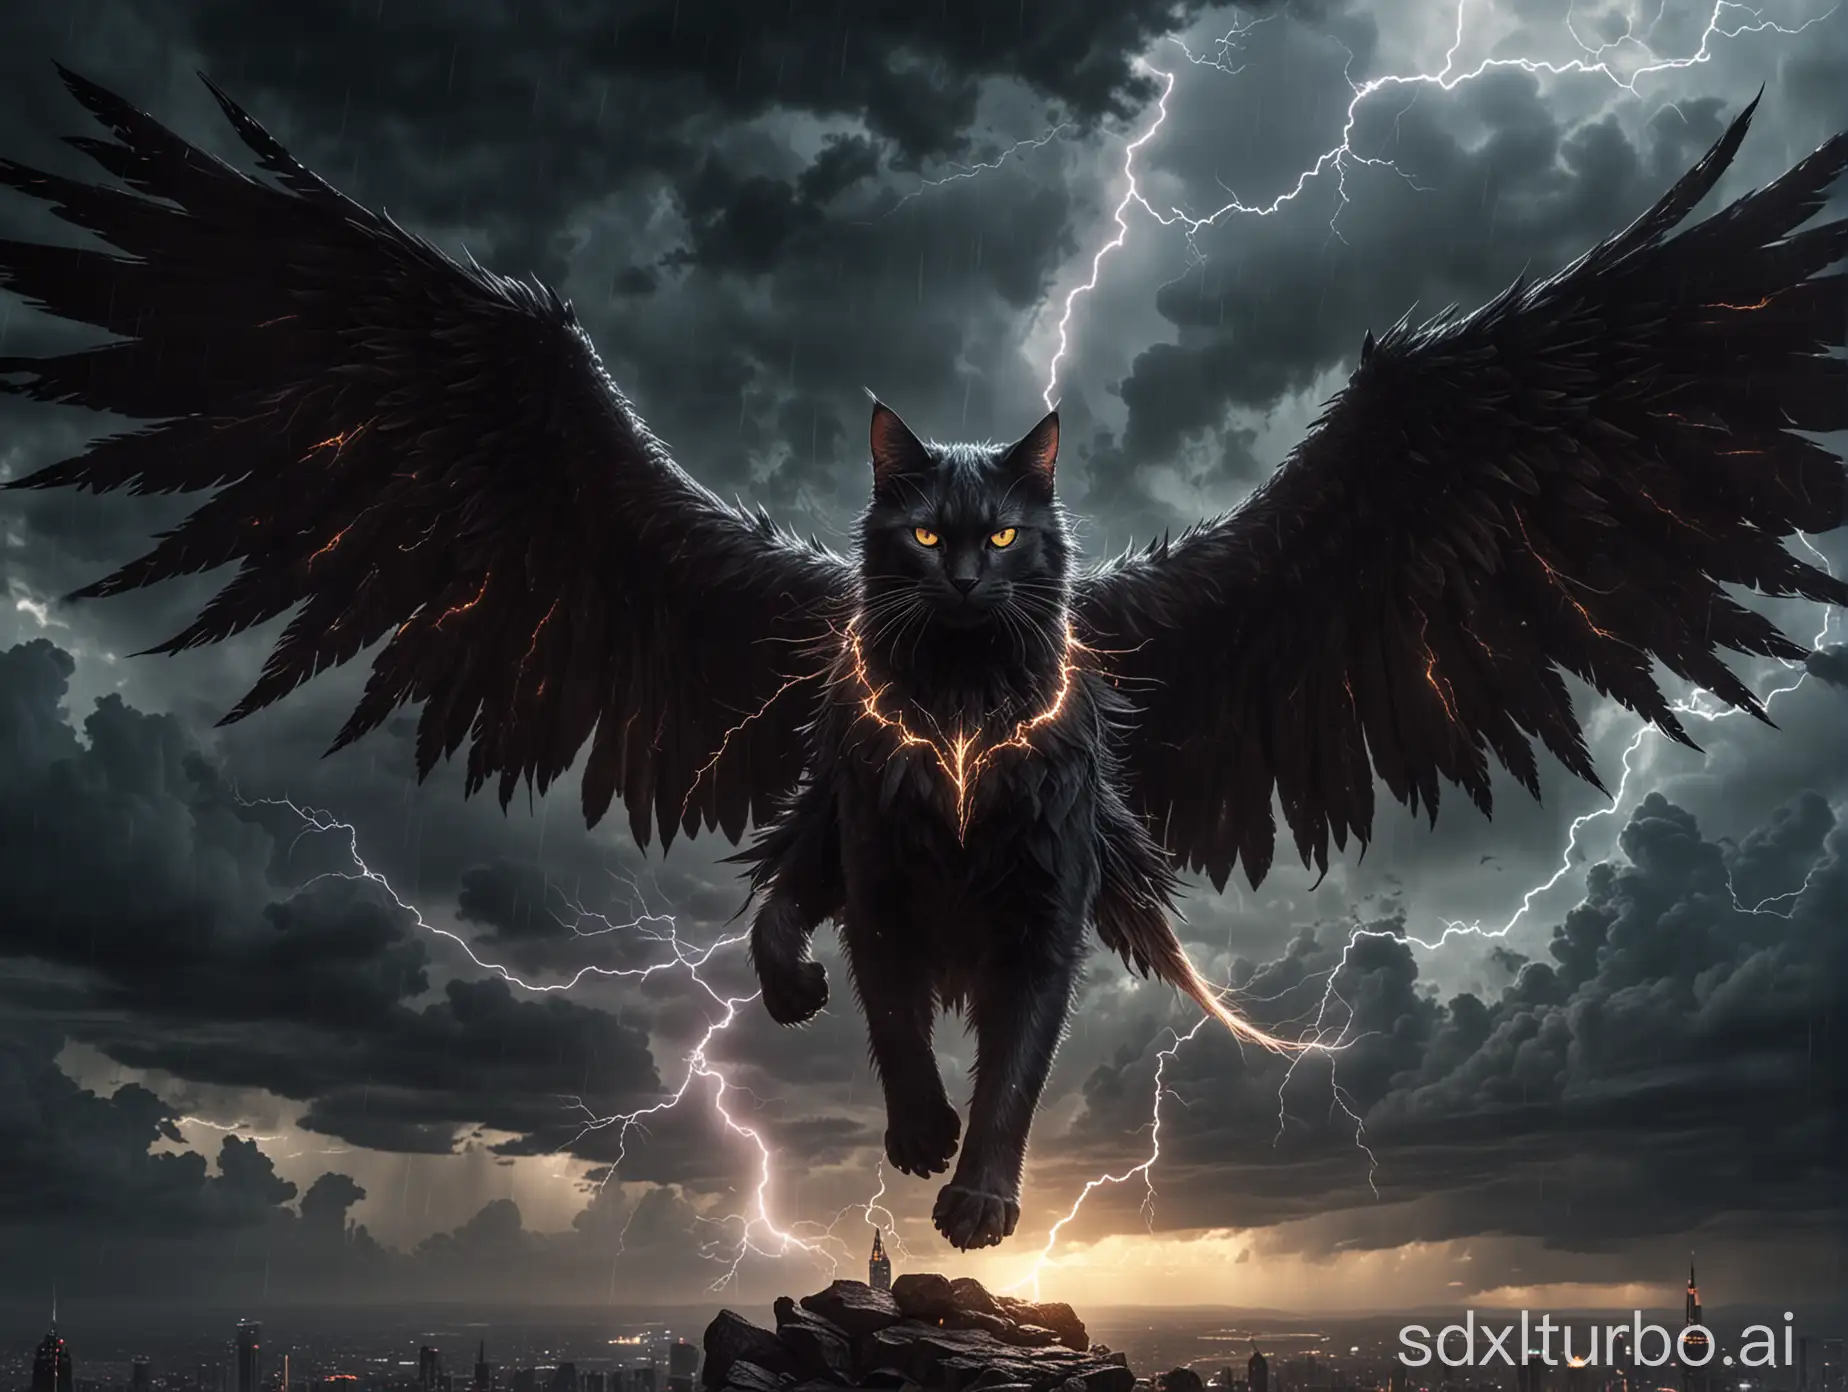 Dark clouds, lightning, demonic wings, majestic, Cat King, uhd 16:9